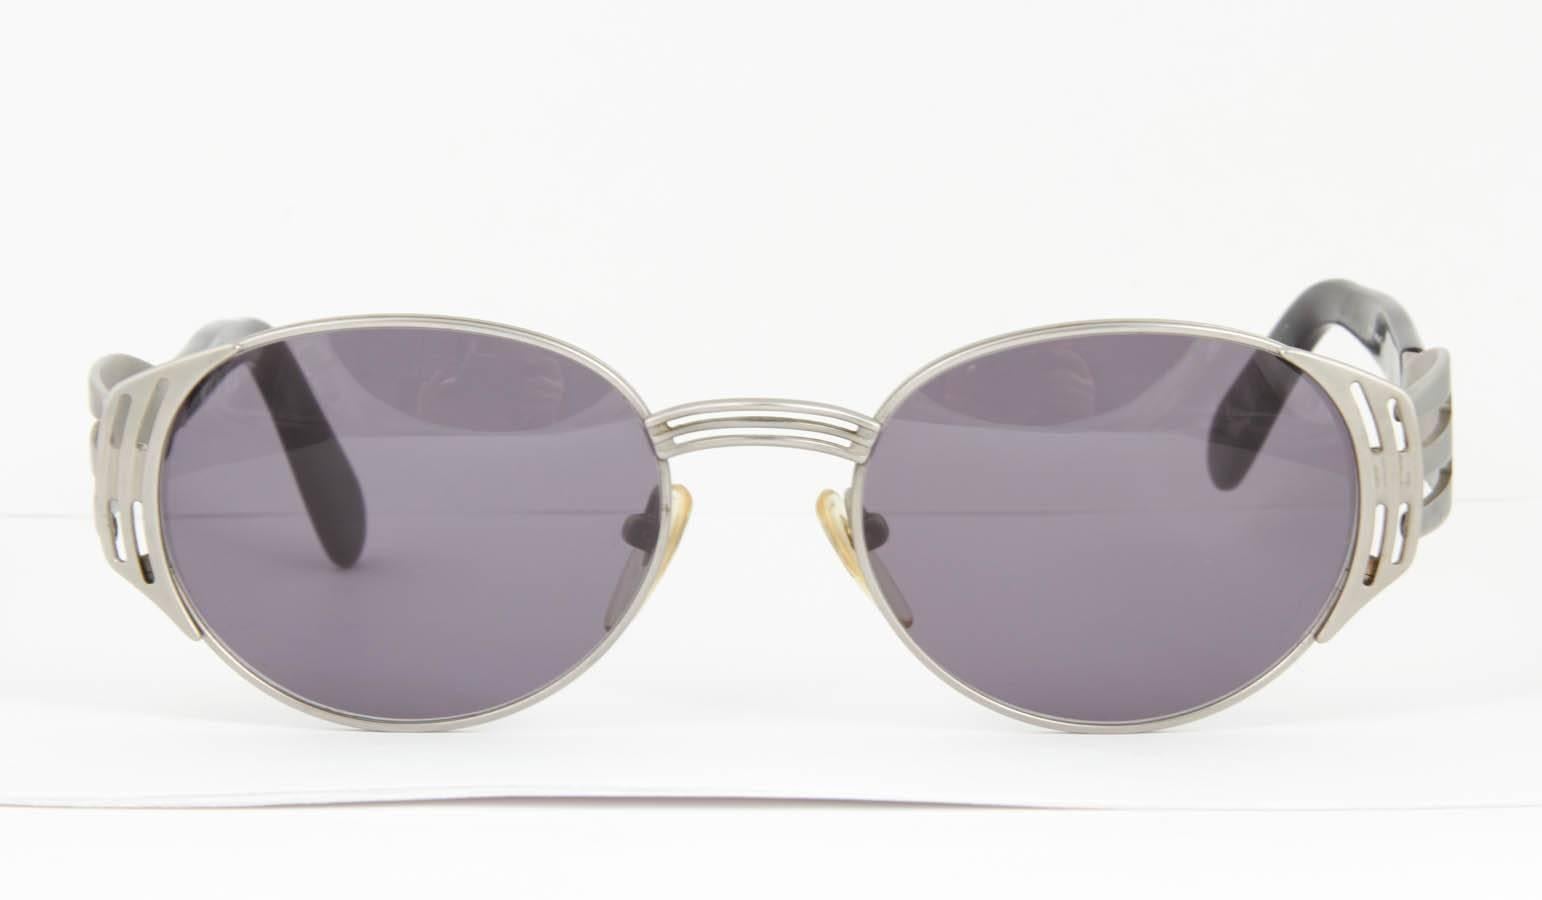 Gray Jean Paul Gaultier 56-3281 Fork Vintage Sunglasses For Sale